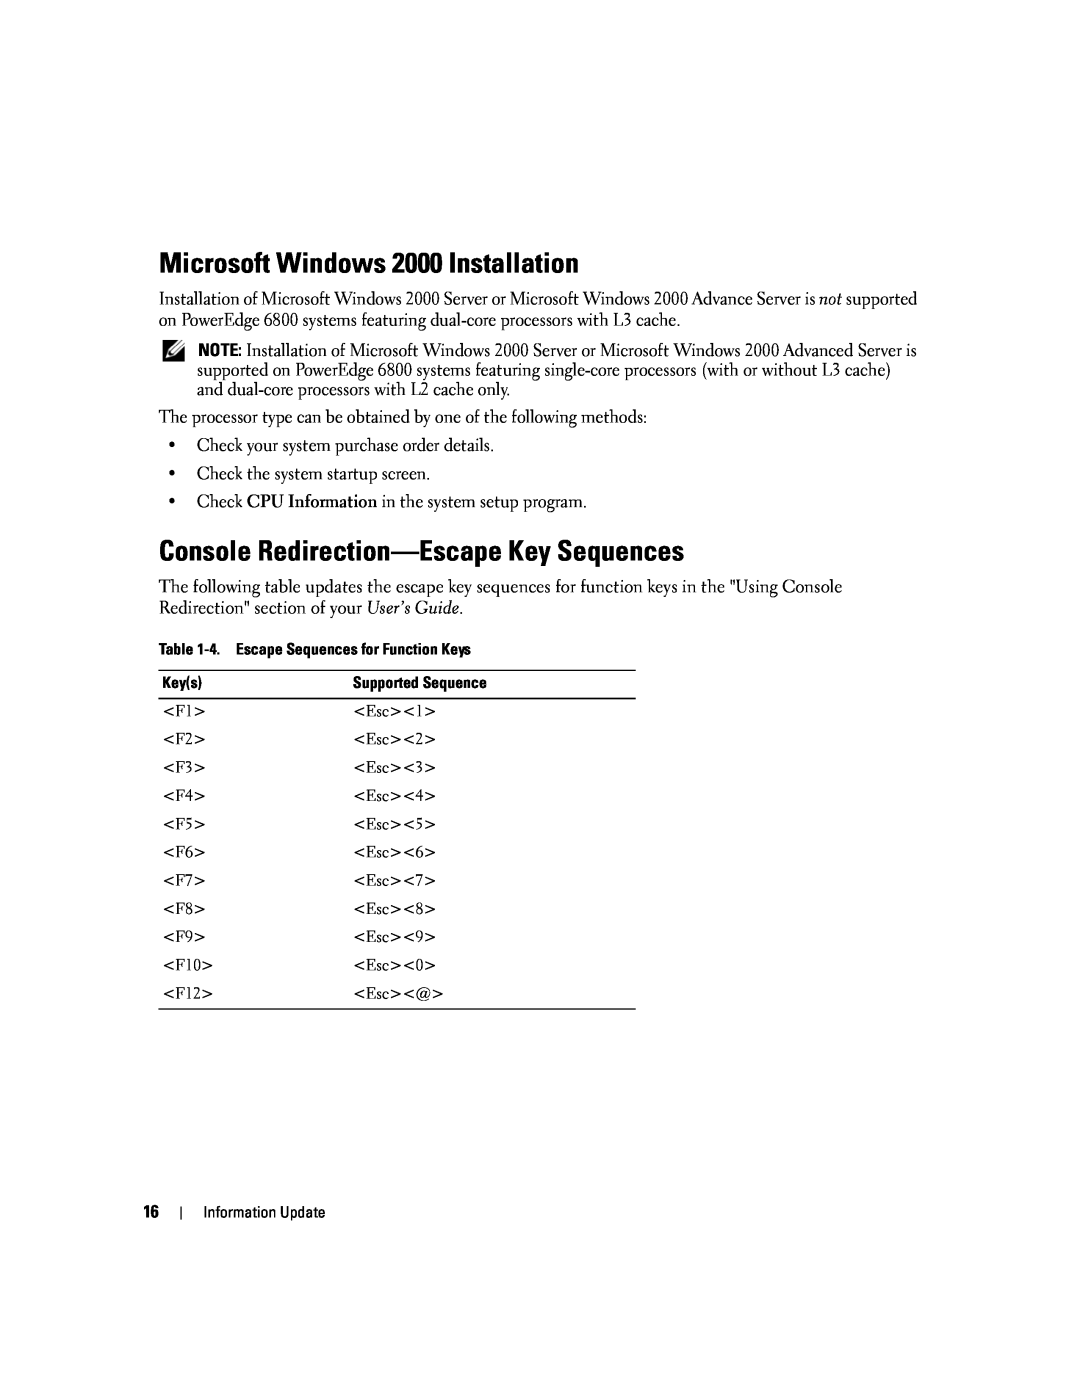 Dell 6800 manual Microsoft Windows 2000 Installation, Console Redirection-Escape Key Sequences 